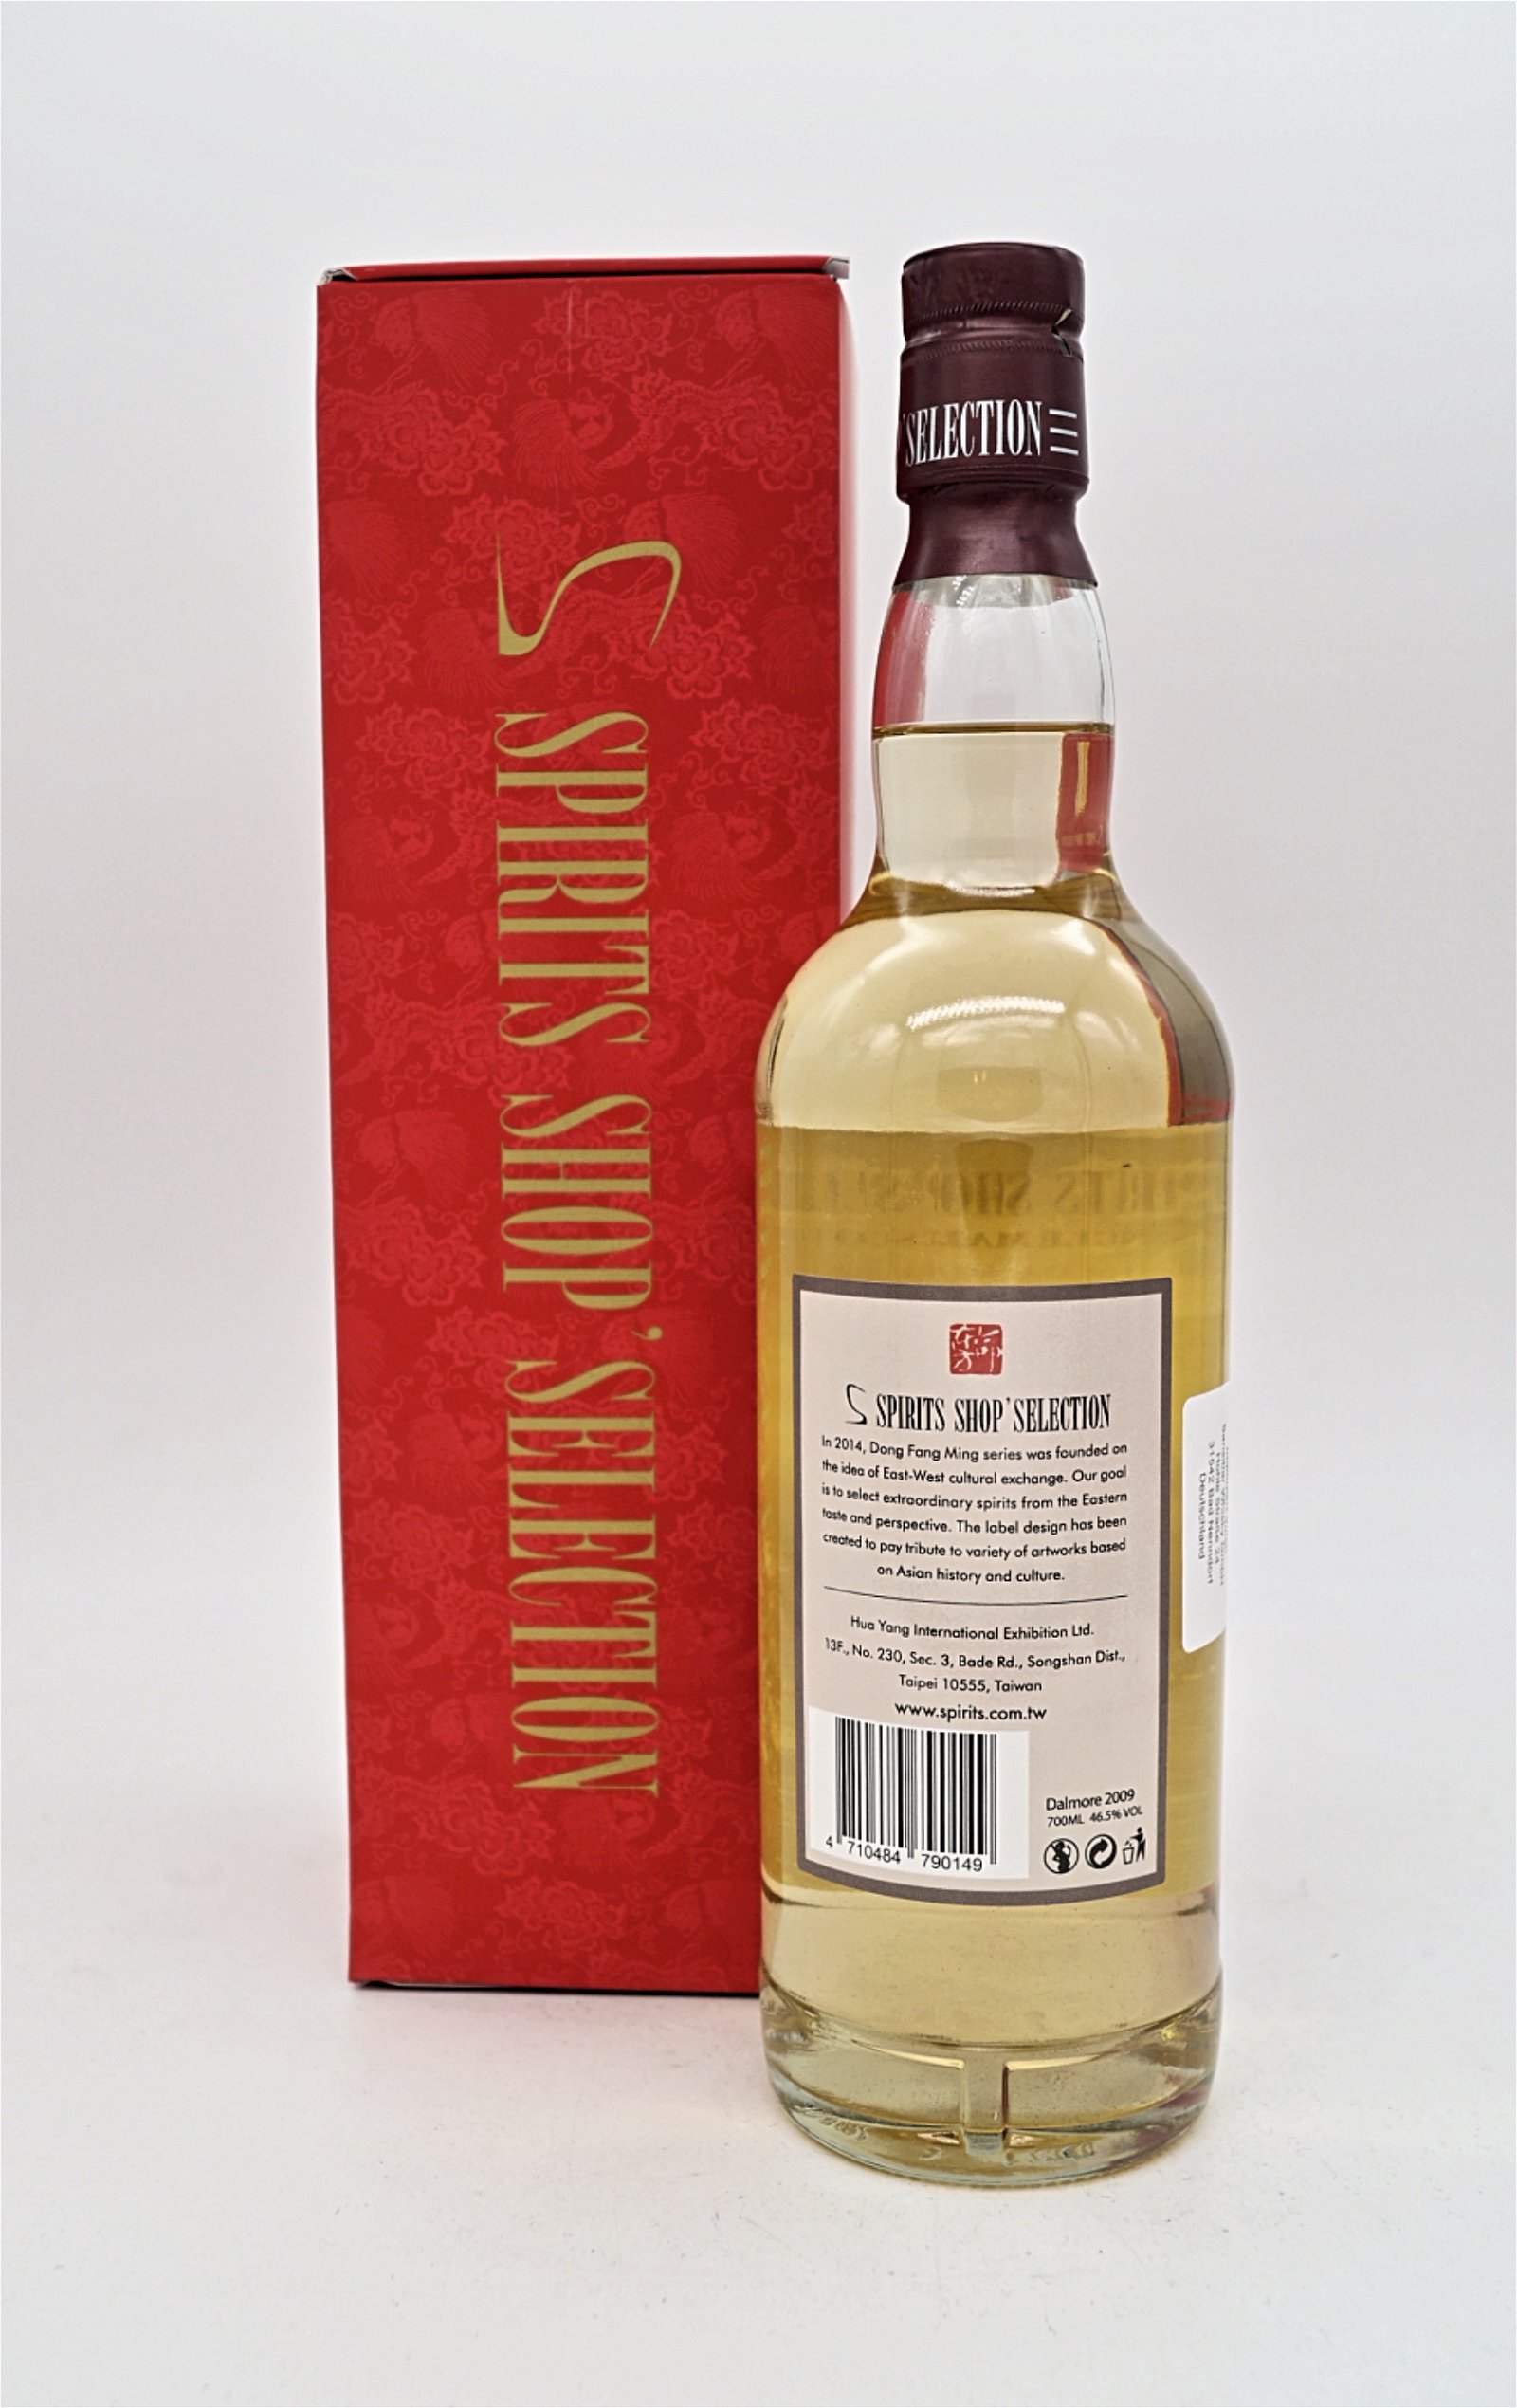 S-Spirits Shop Selection 10 Jahre Dalmore 2009/2019 Hogshead #800158 Single Cask Highland Single Malt Scotch Whisky